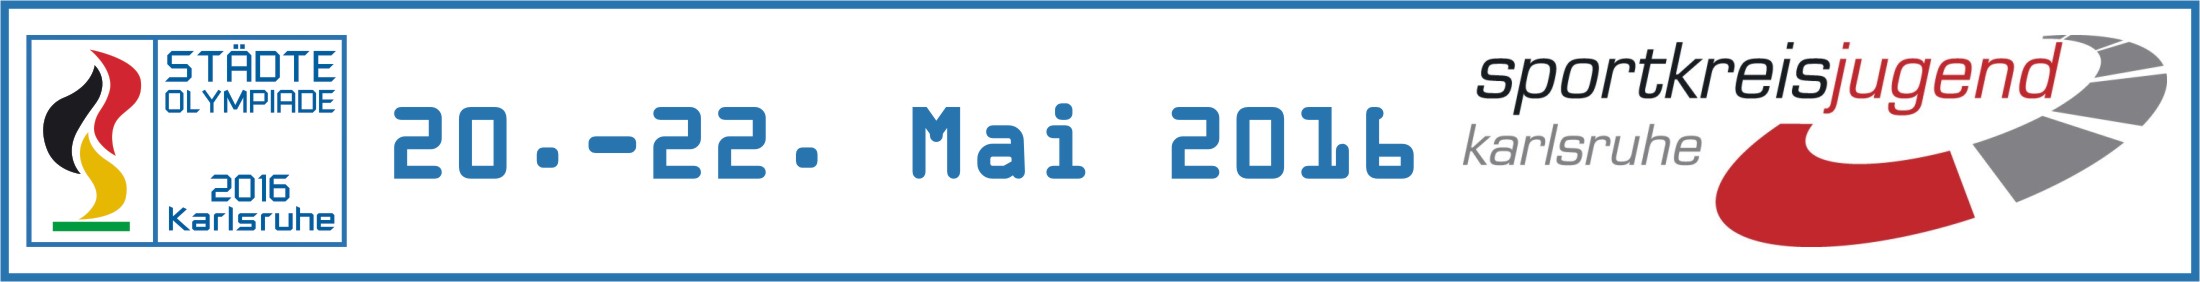 logo stadtgeburtstag